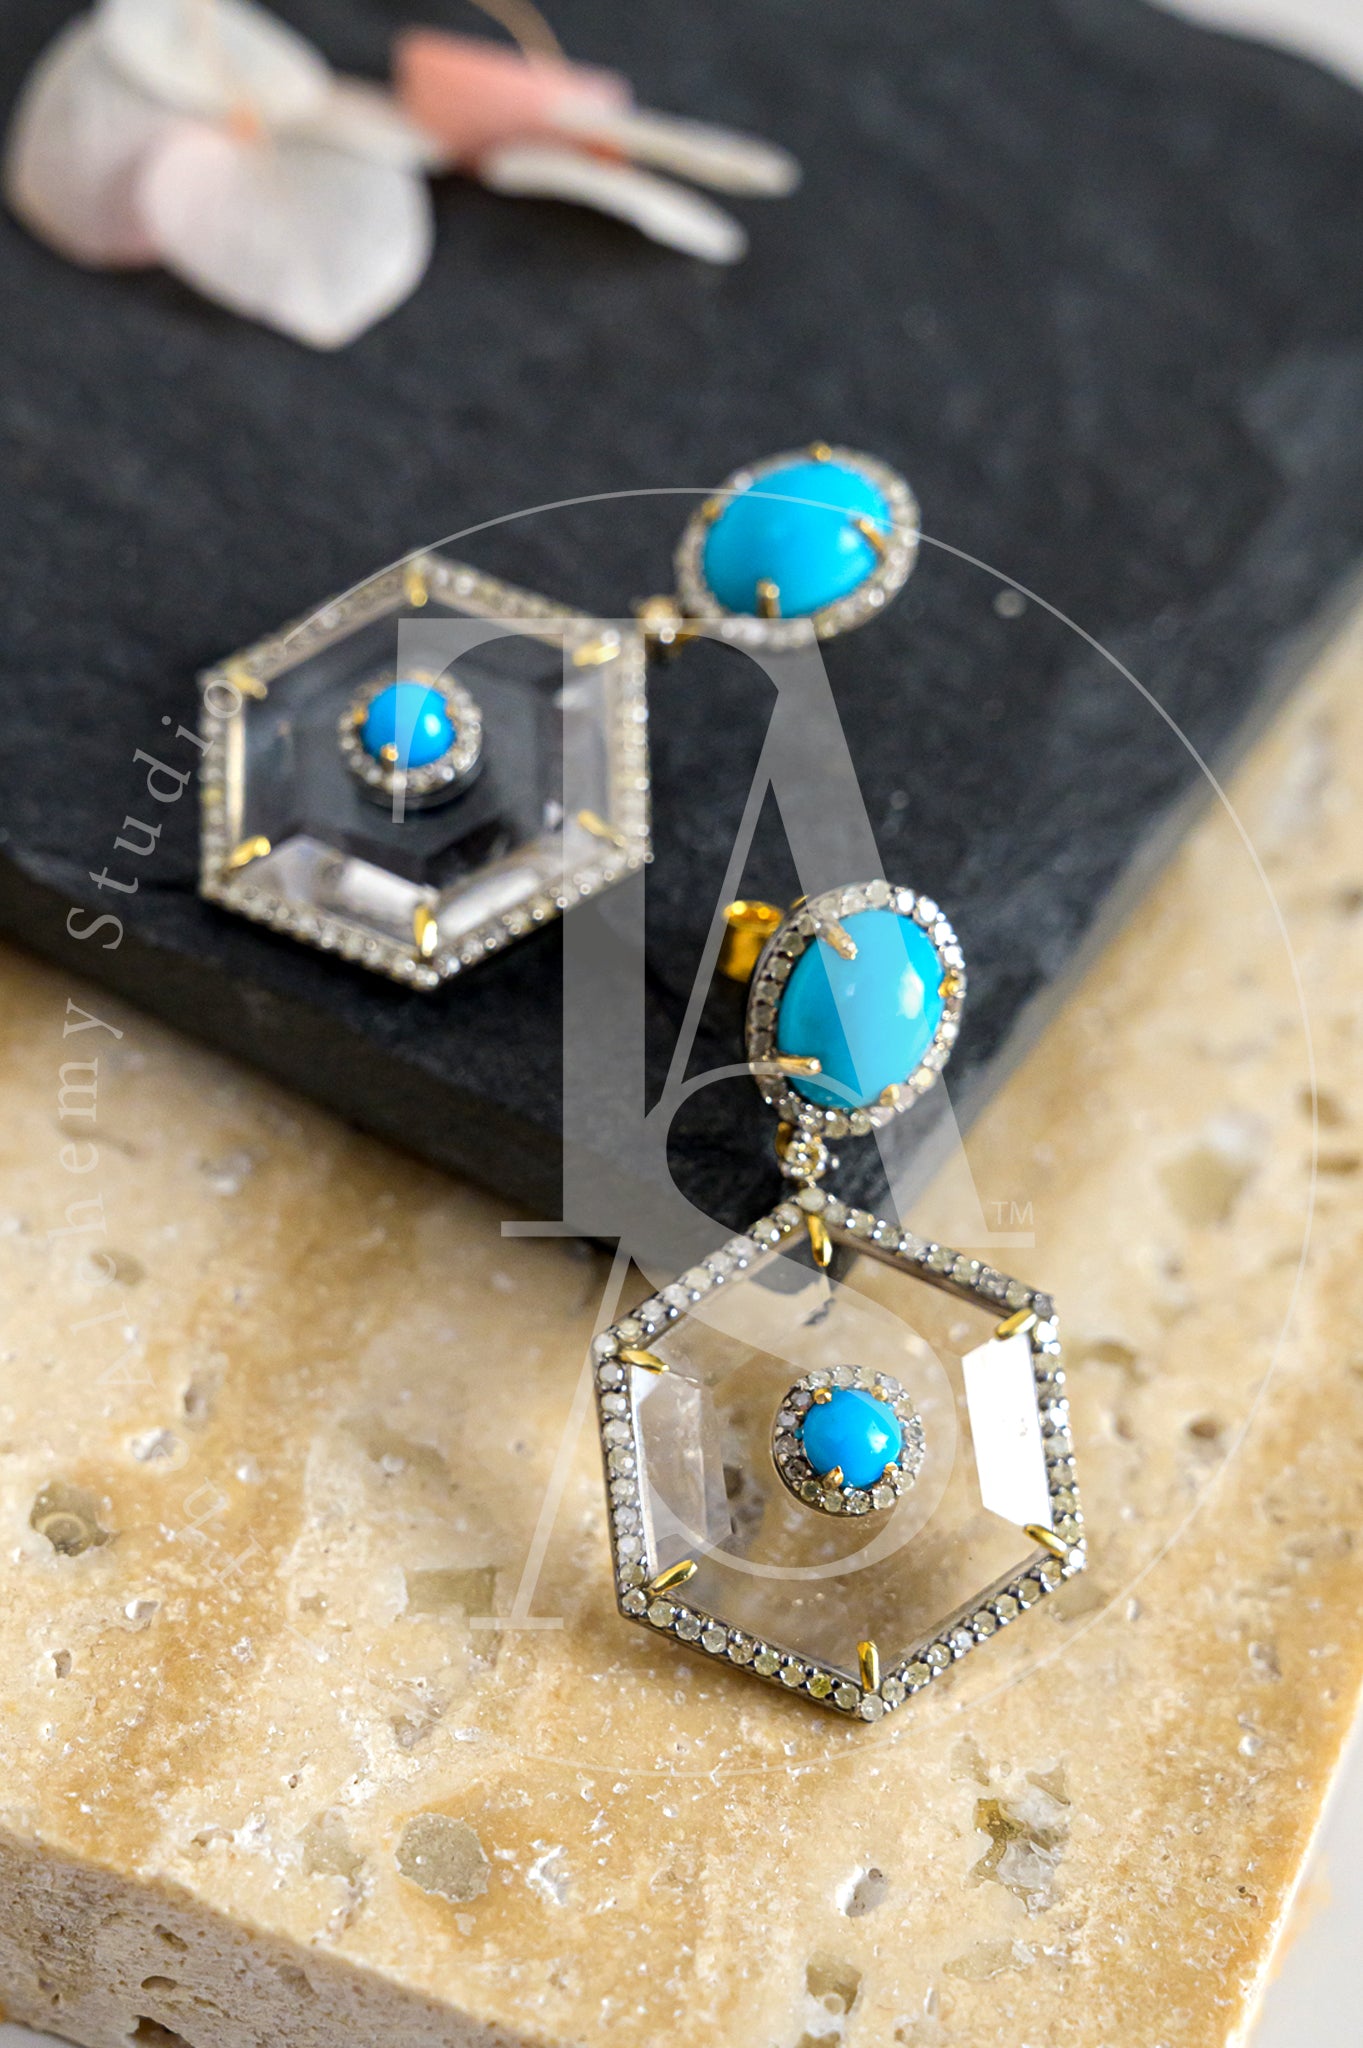 Bijou Turquoise and Crystal Earrings